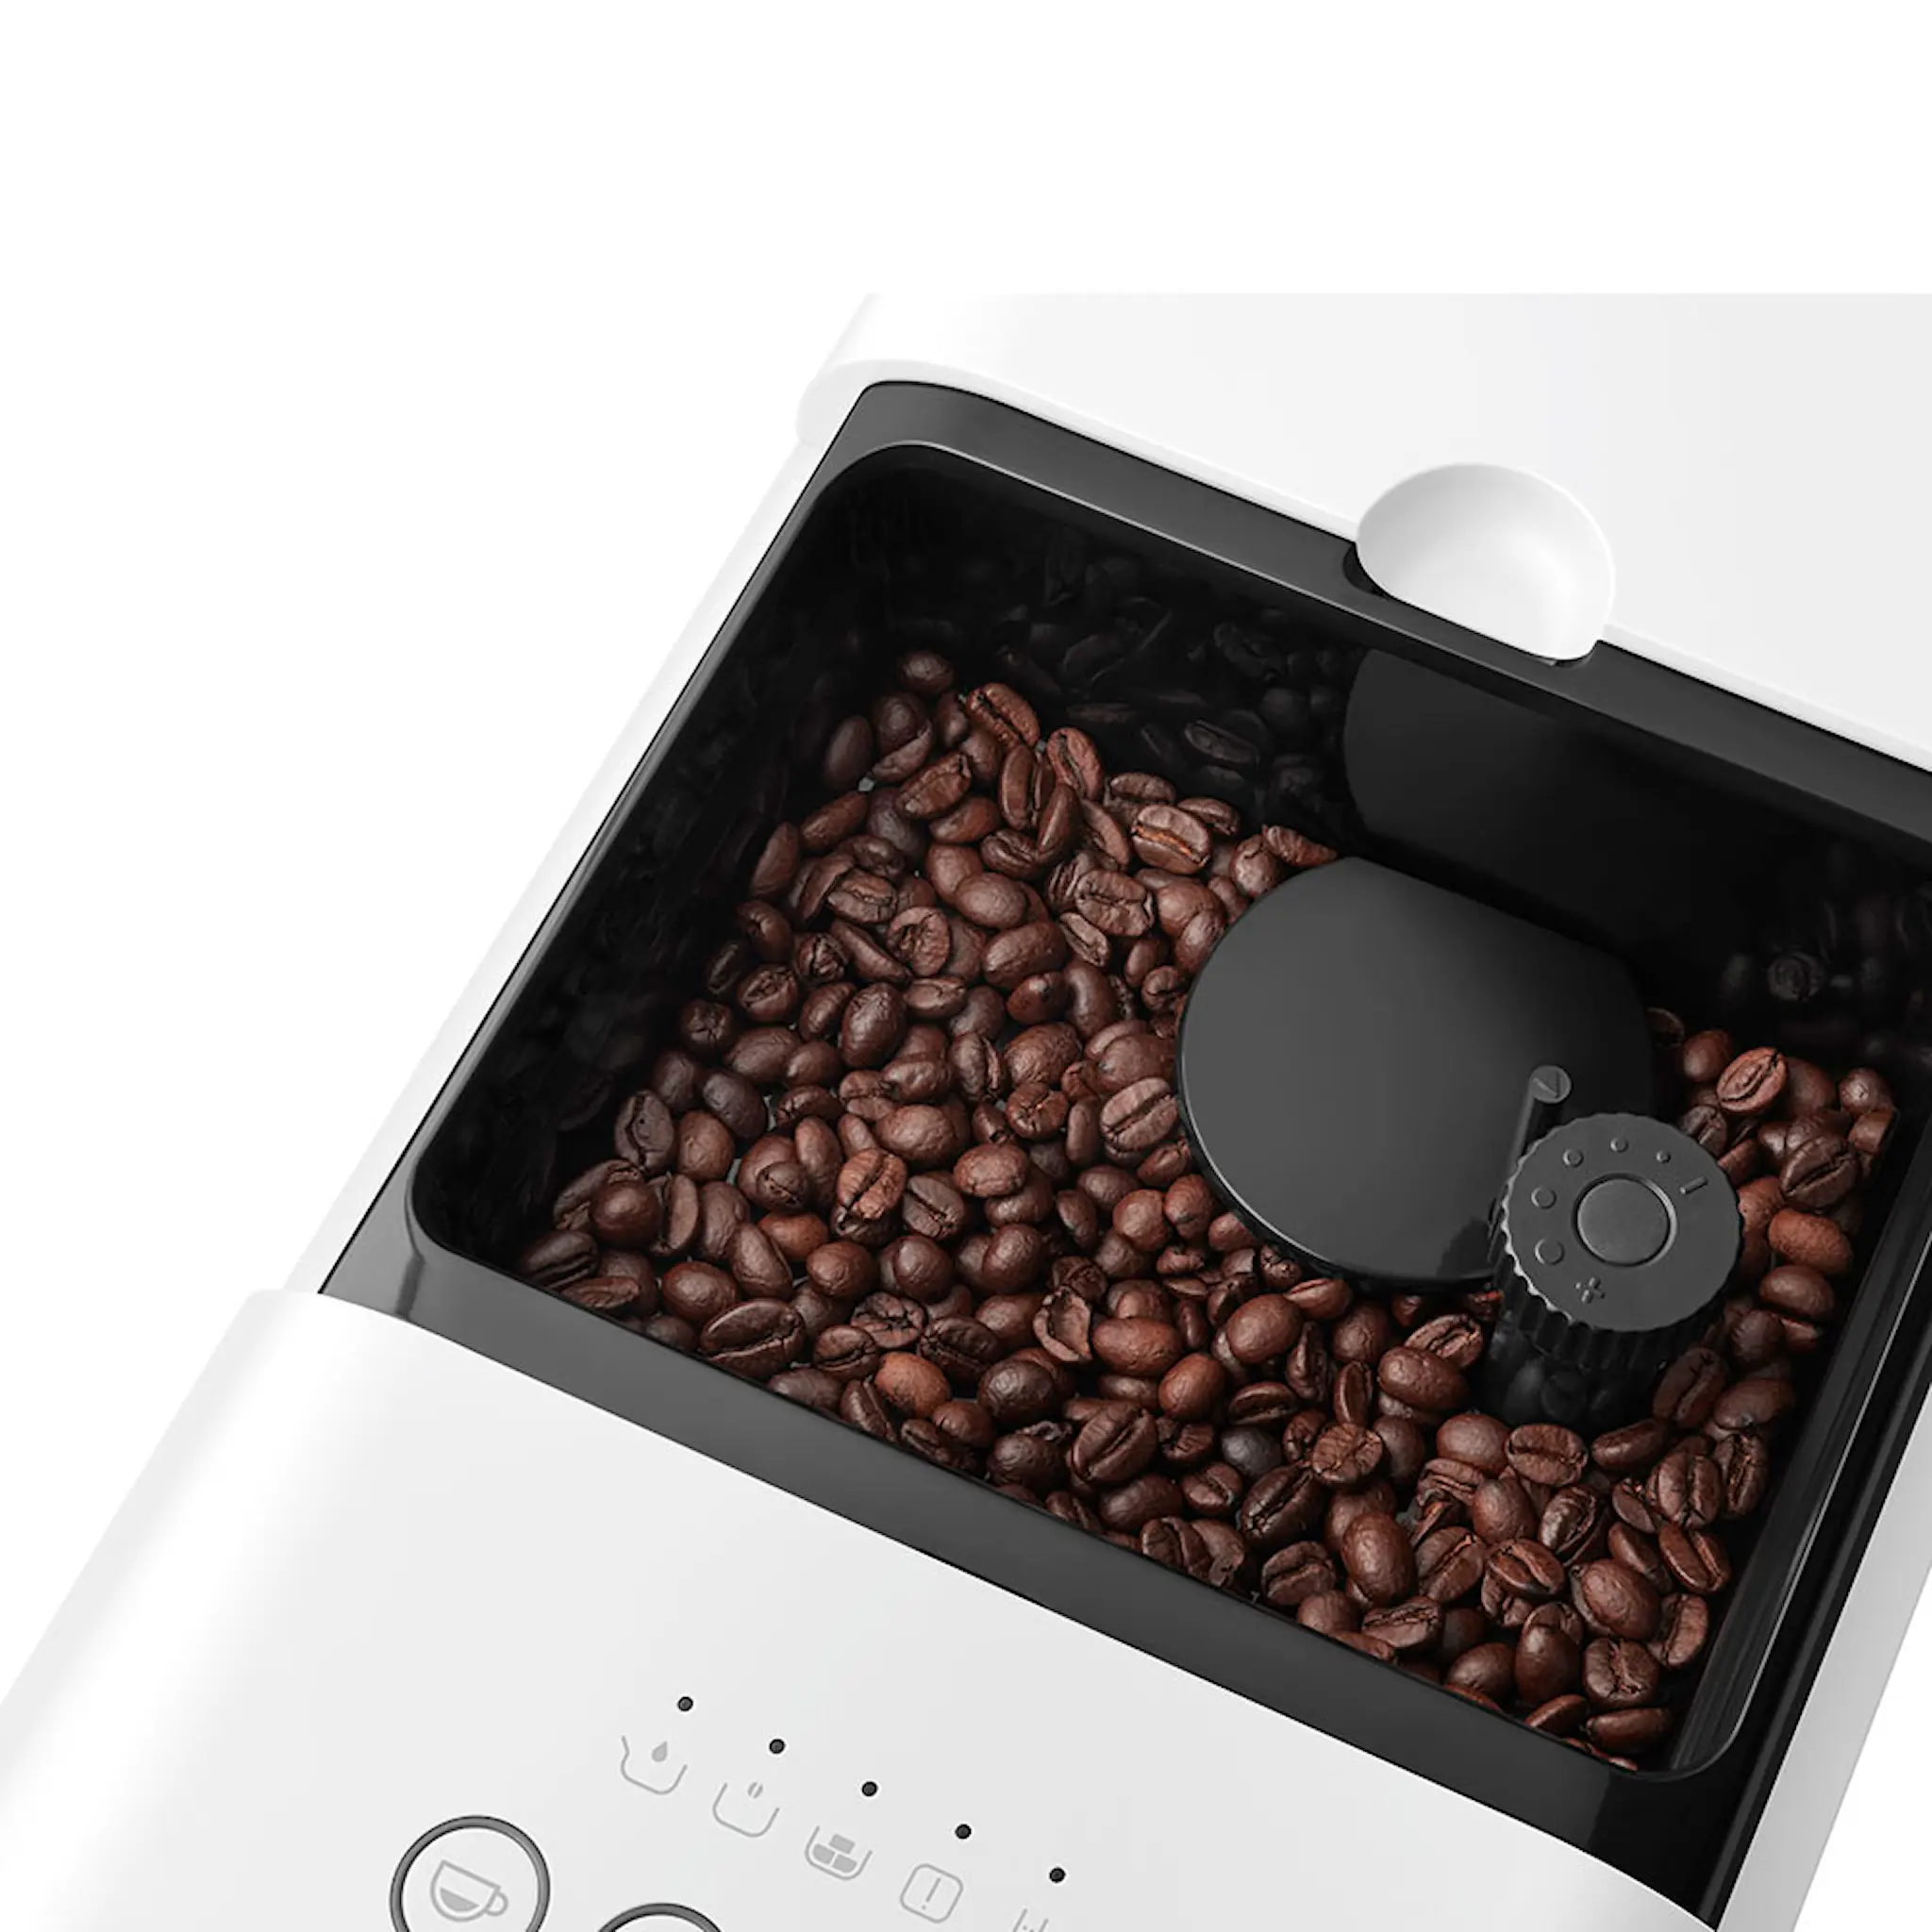 SMEG Smeg Helautomatisk Kaffemaskin BCC11 1,4 L Matt Vit